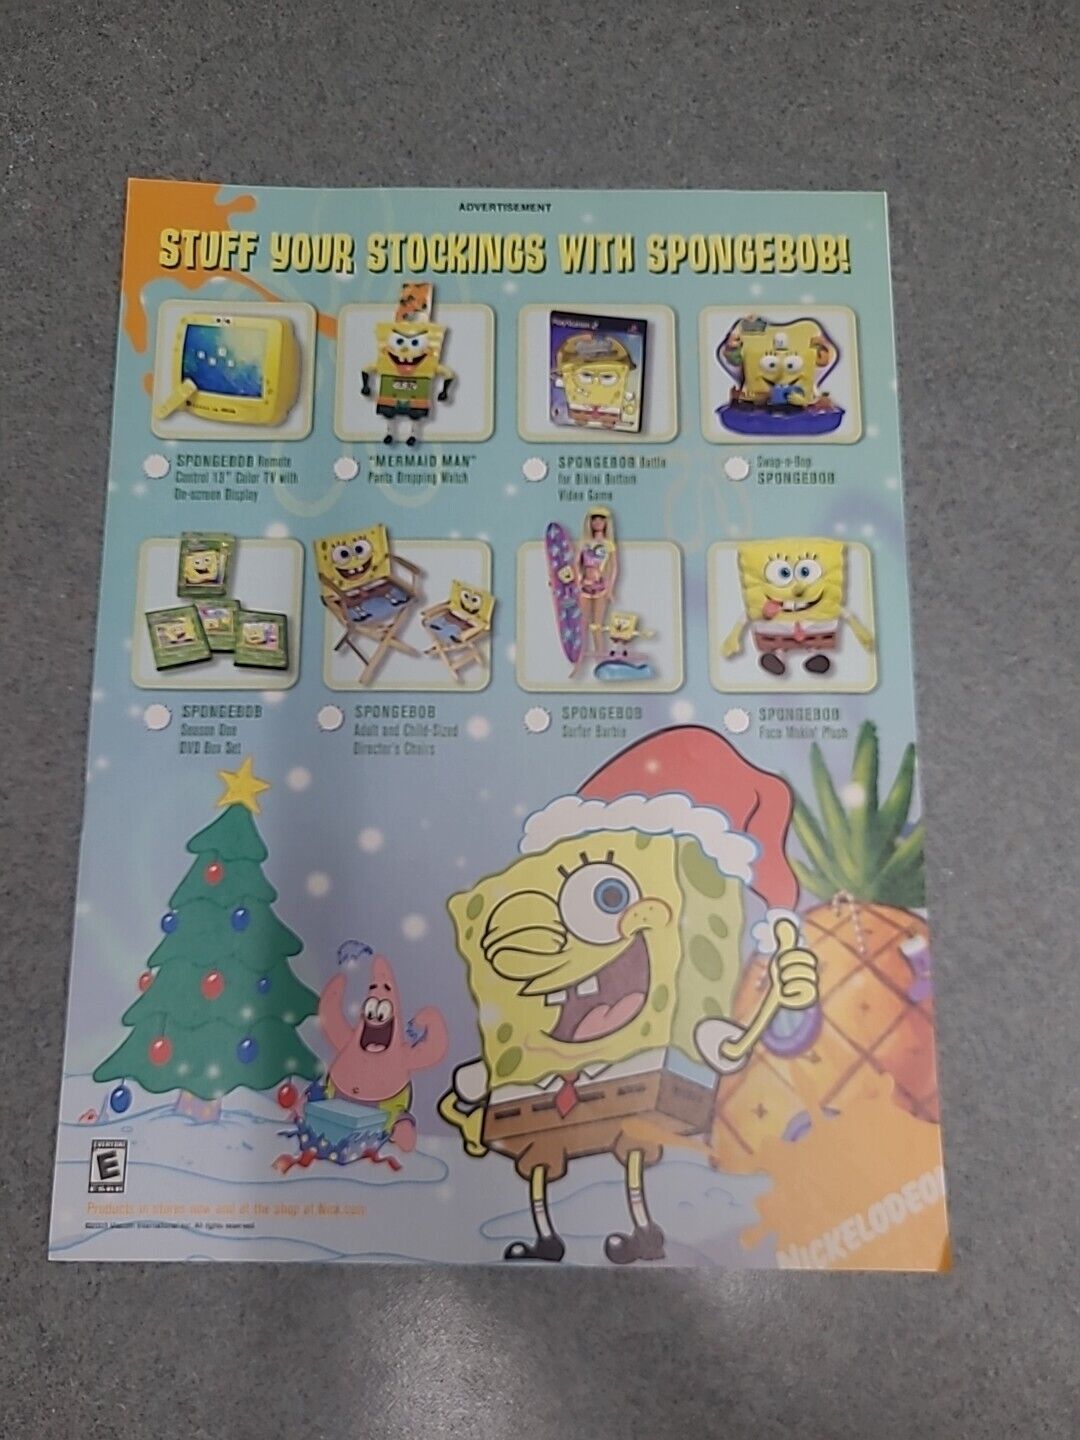 Spongebob Squarepants Stocking Stuffers Print Ad 2004 8x11 Wall Art Decor 